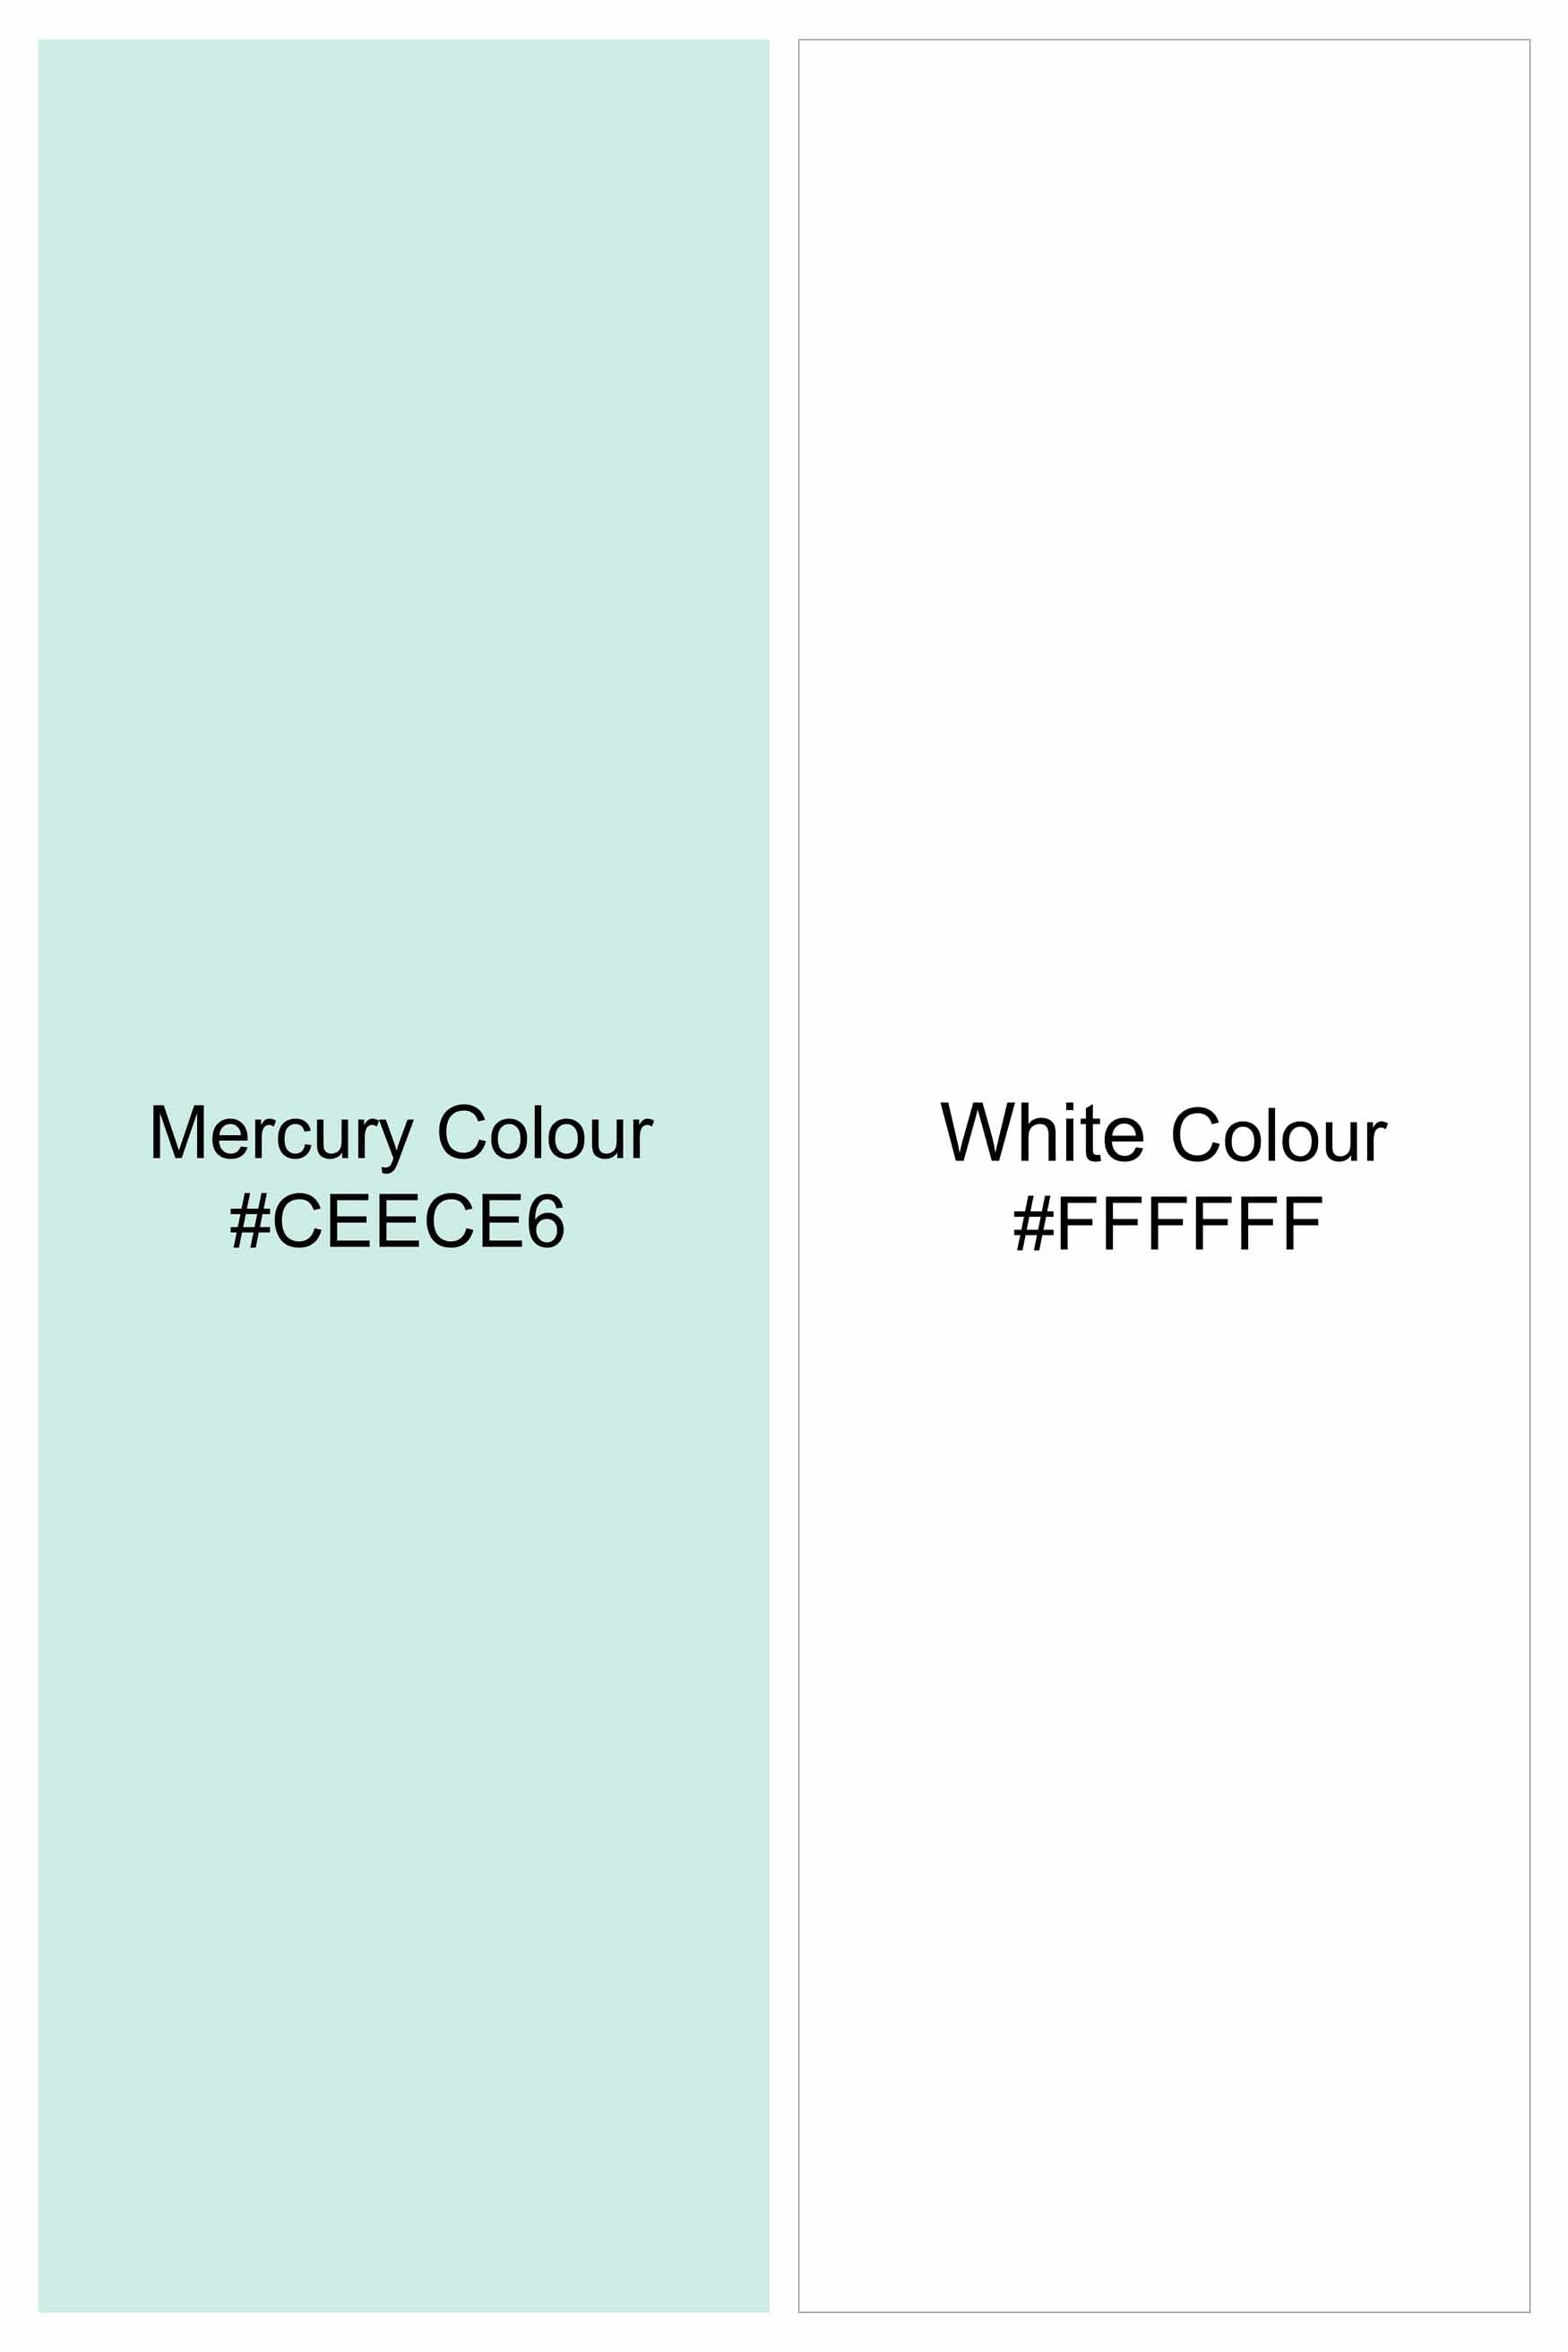 Bright White and Mercury Green Striped Birds Hand Painted Premium Cotton Designer Shirt 6392-CA-ART-38, 6392-CA-ART-H-38, 6392-CA-ART-39, 6392-CA-ART-H-39, 6392-CA-ART-40, 6392-CA-ART-H-40, 6392-CA-ART-42, 6392-CA-ART-H-42, 6392-CA-ART-44, 6392-CA-ART-H-44, 6392-CA-ART-46, 6392-CA-ART-H-46, 6392-CA-ART-48, 6392-CA-ART-H-48, 6392-CA-ART-50, 6392-CA-ART-H-50, 6392-CA-ART-52, 6392-CA-ART-H-52